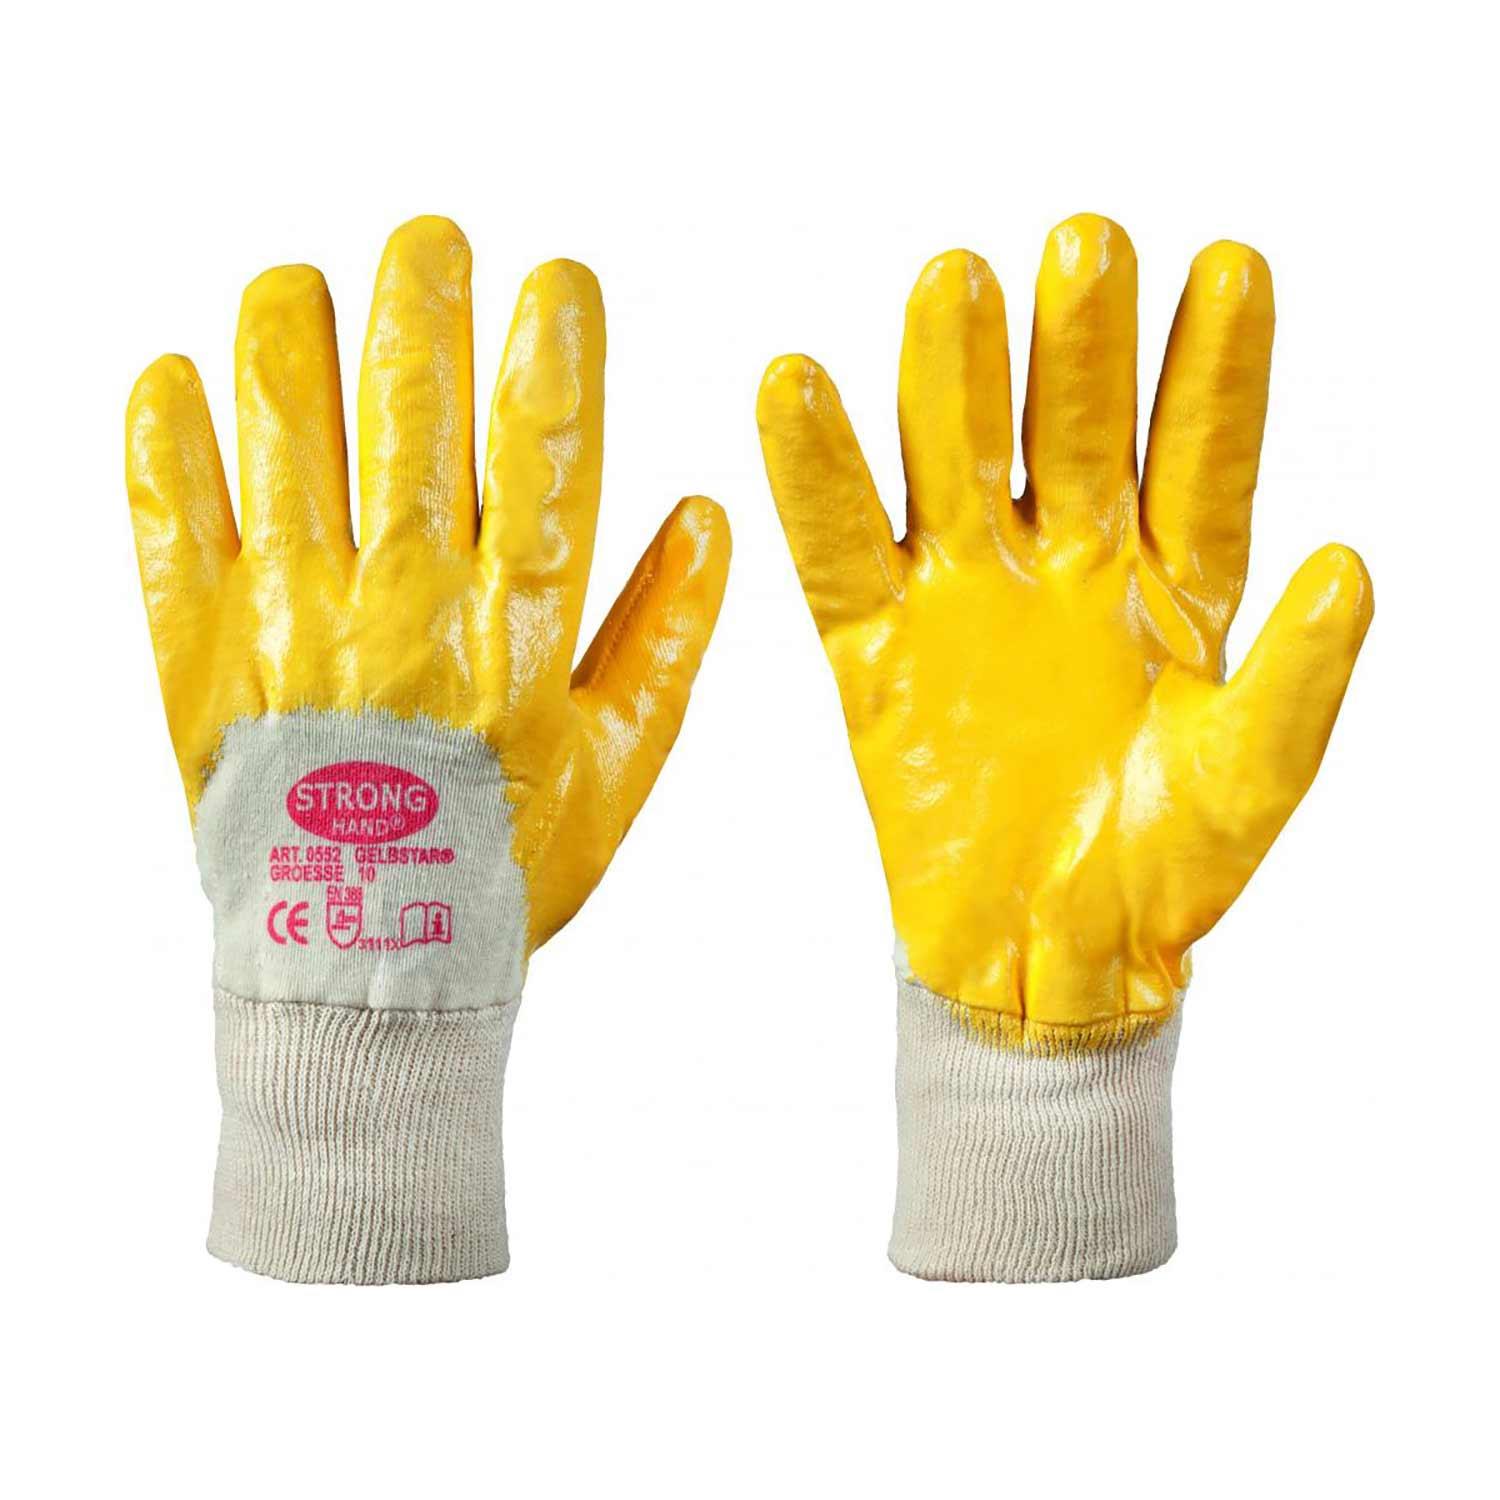 Gelbstar Stronghand Nitril Handschuh Gr. 9